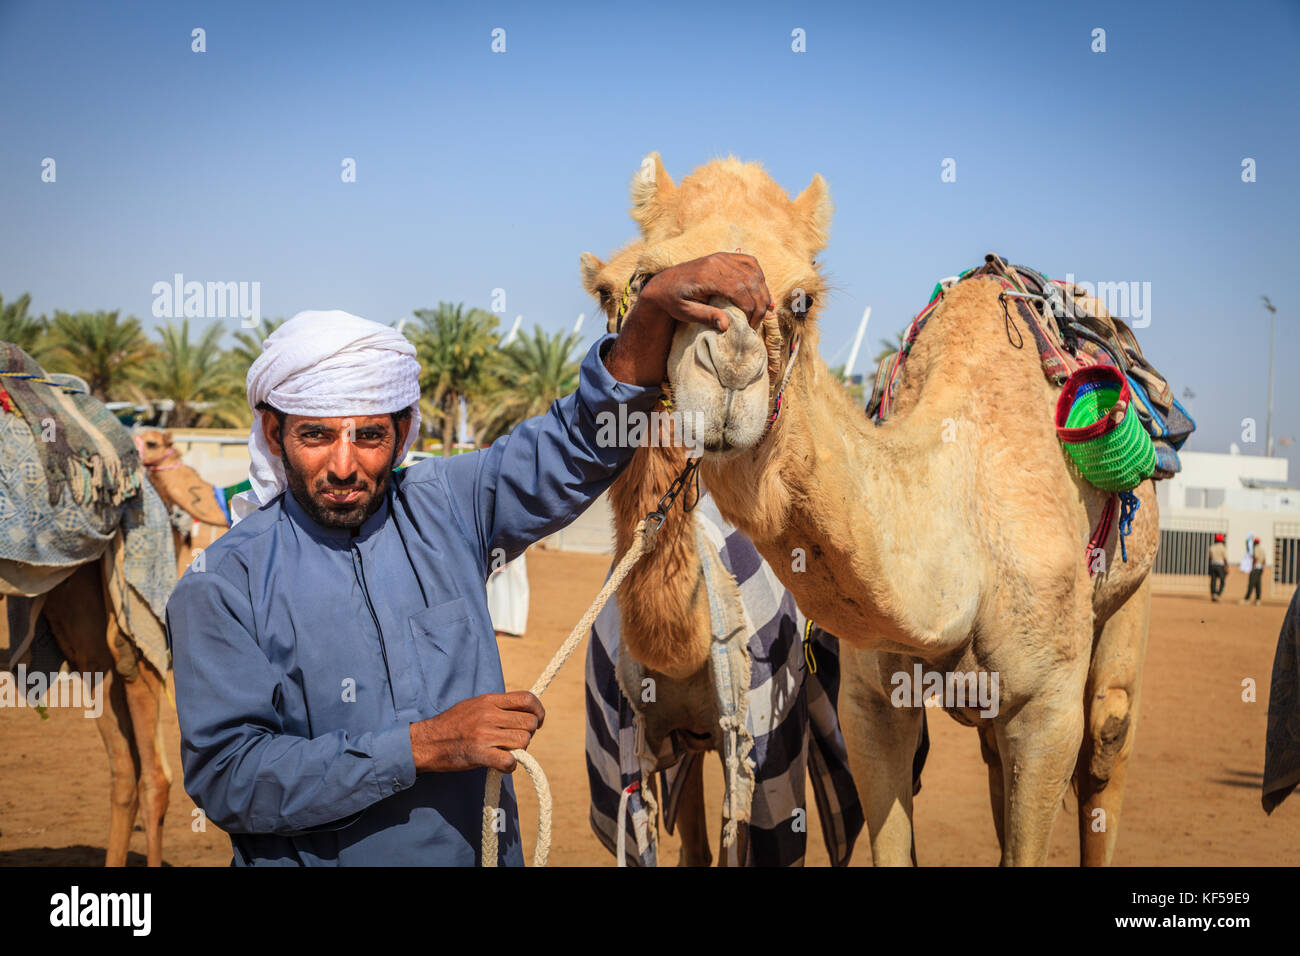 Dubai, United Arab Emirates - March 25, 2016: Camel handler with his animal at Dubai Camel Racing Club Stock Photo